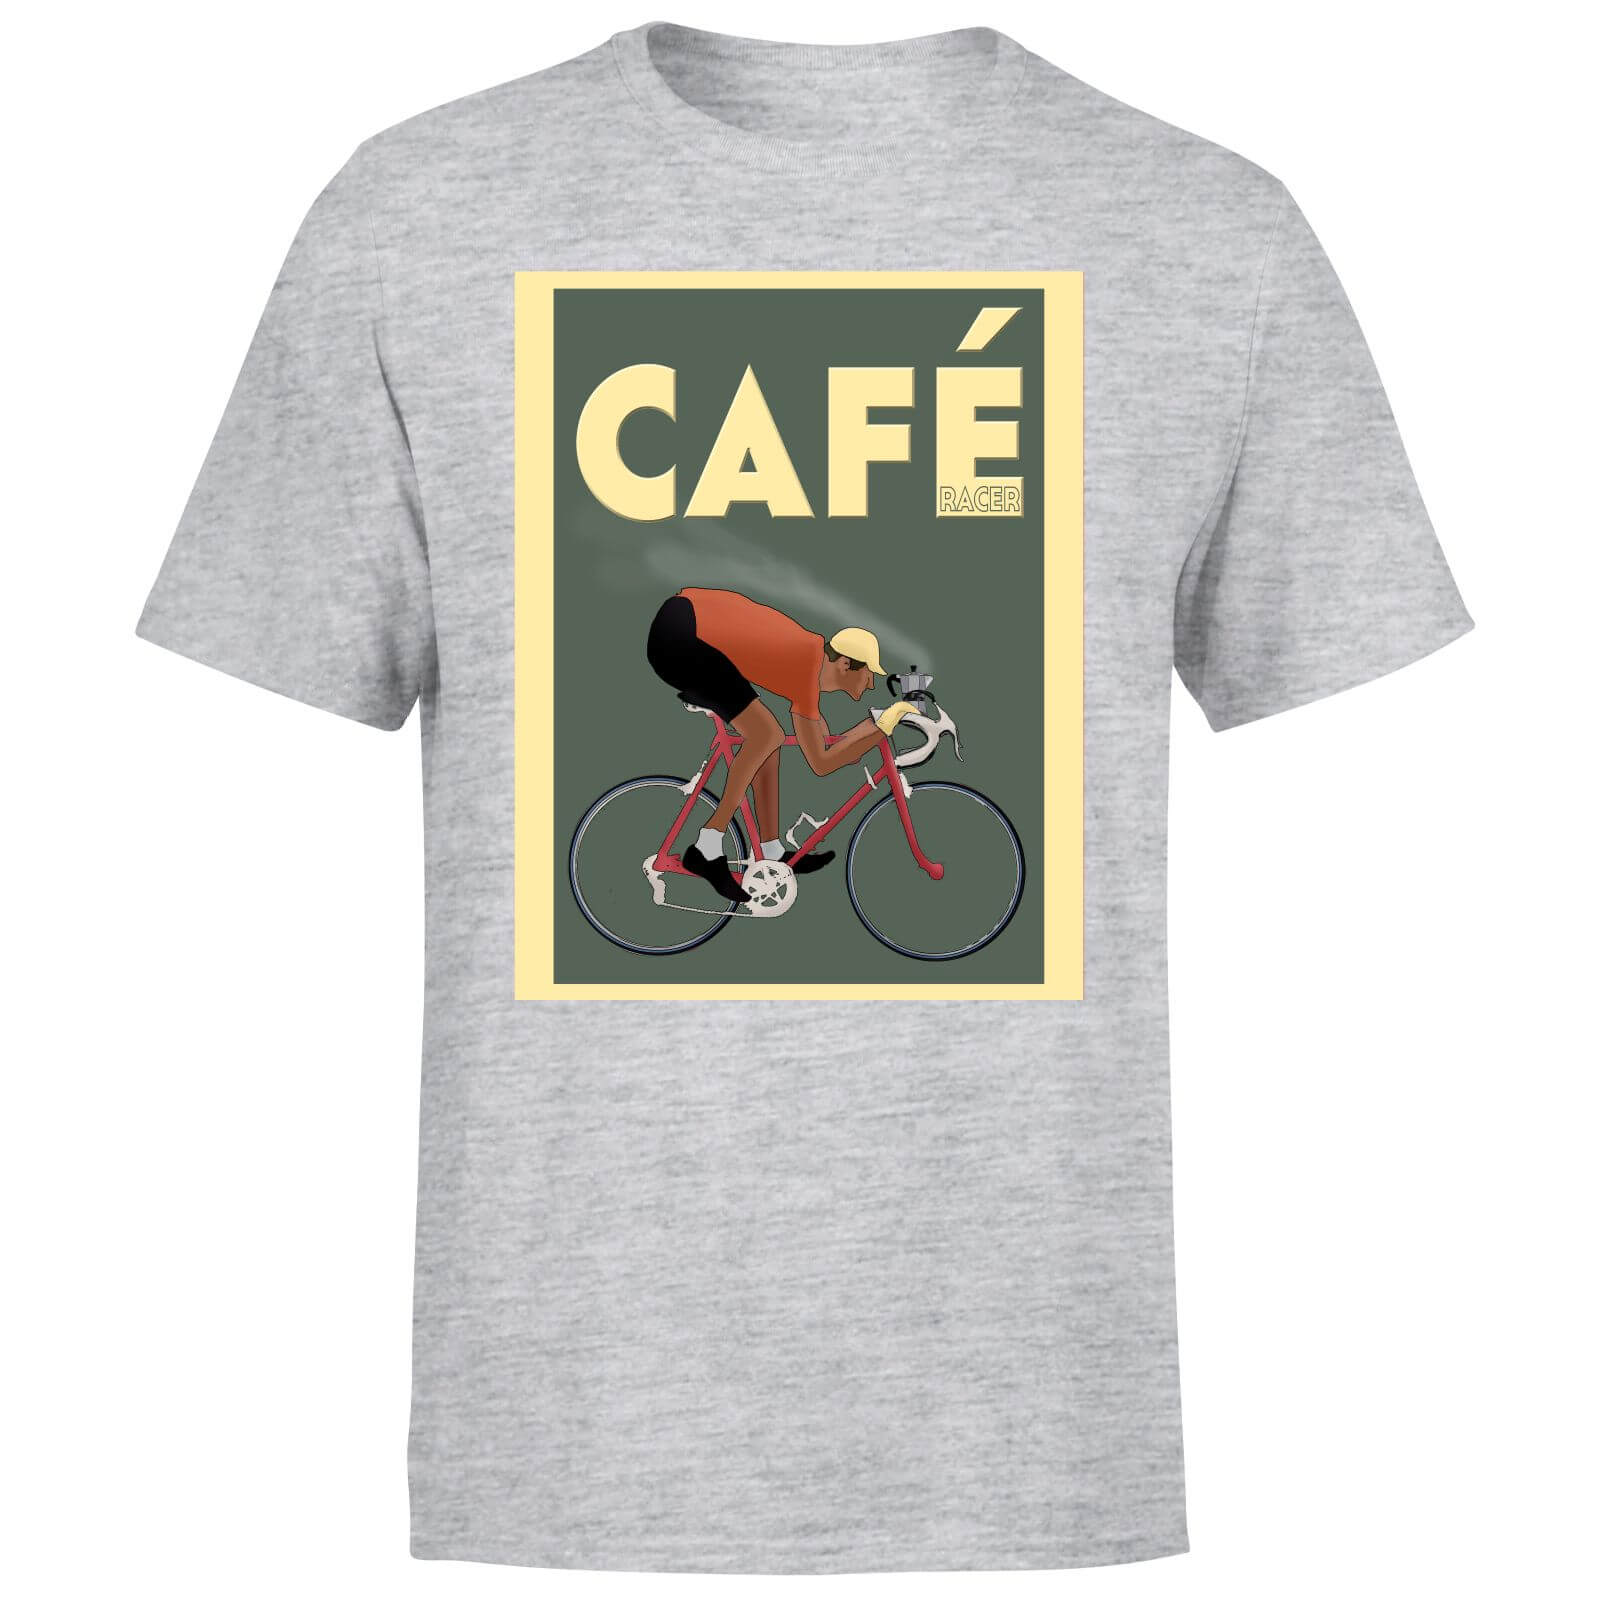 Cafe Racer Men's T-Shirt - Grey - XXL - Grey